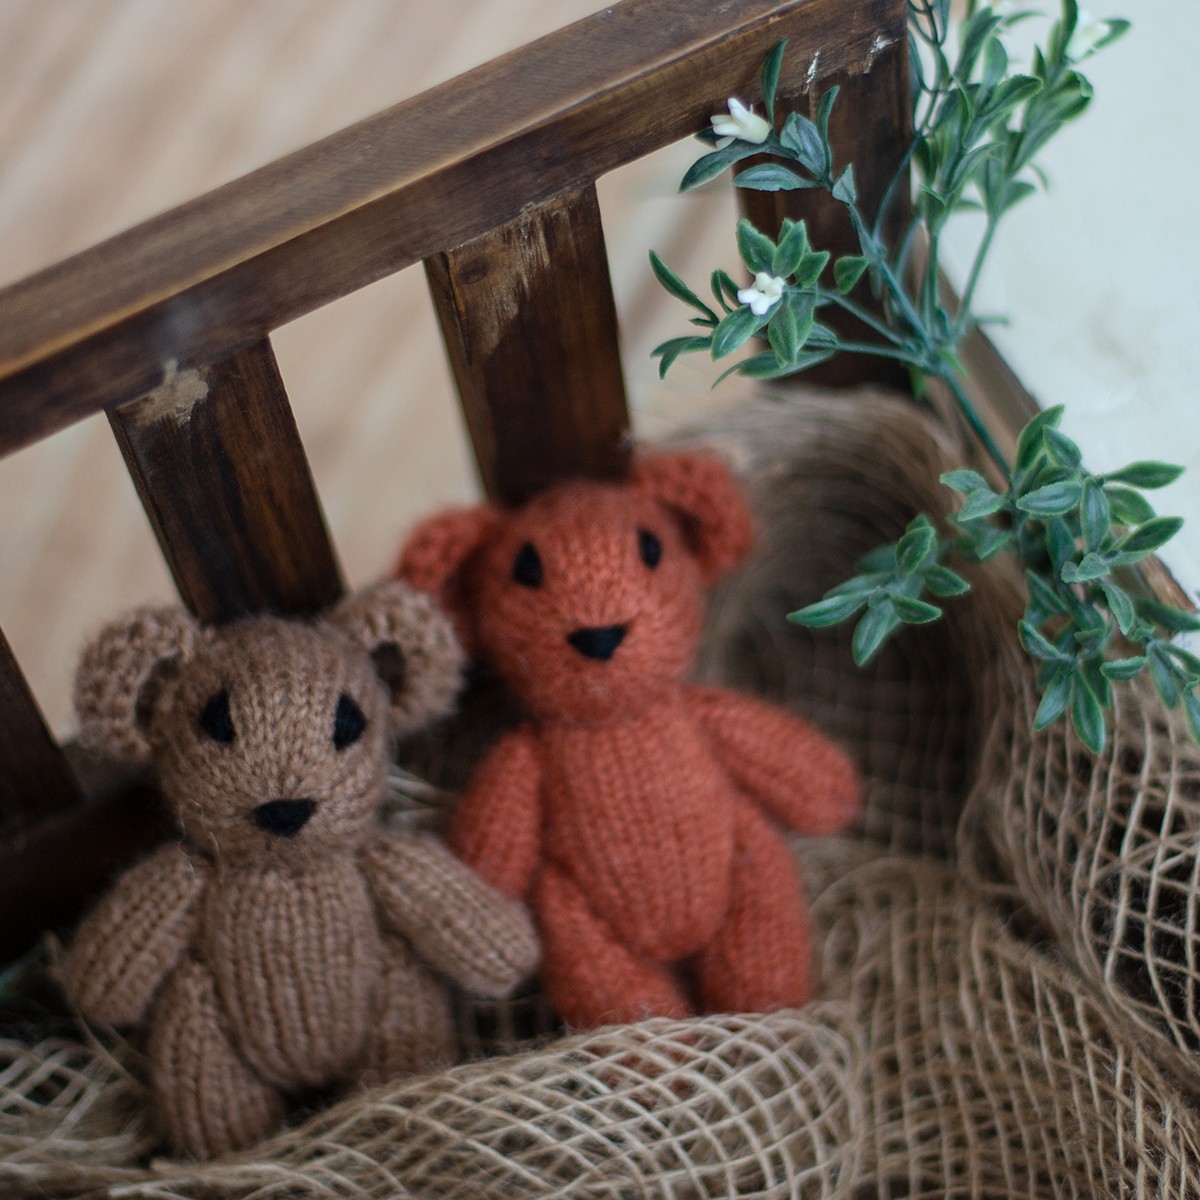 Newborn Teddy Bear Knit Mohair Animal Stuffer Photography Props Crochet Baby Photo Shoot